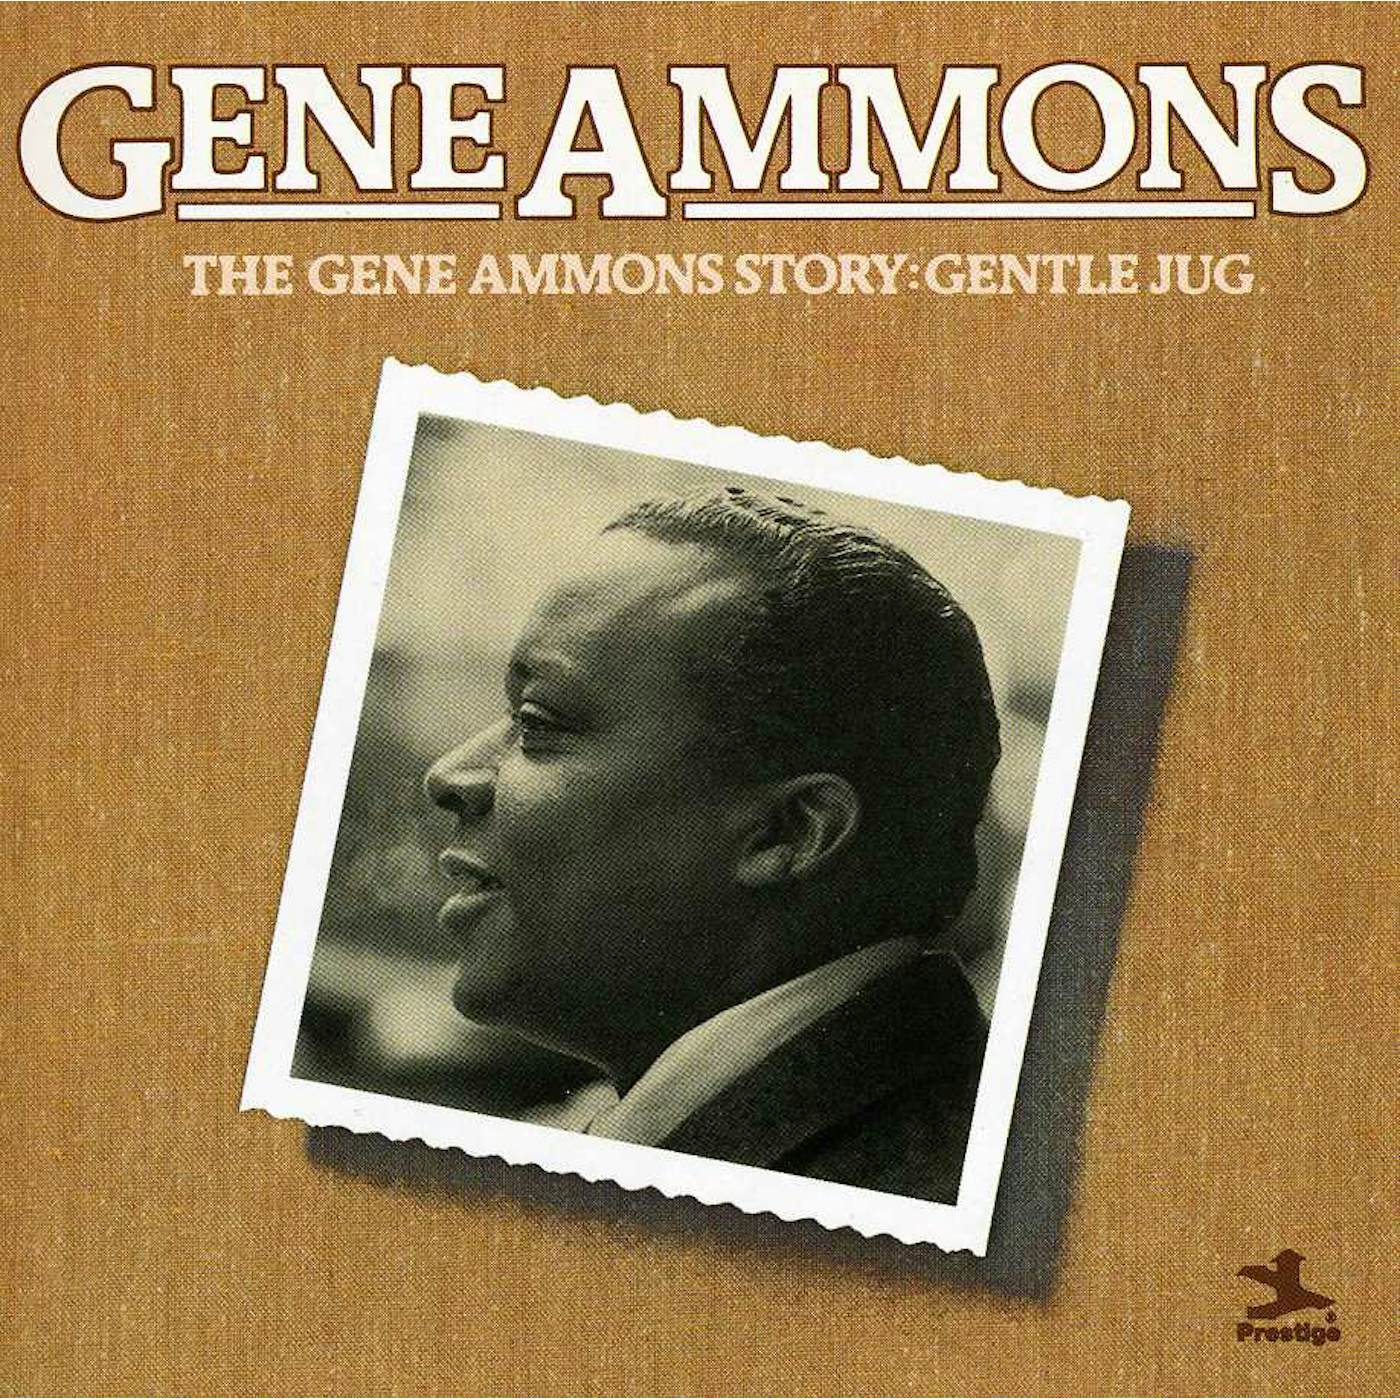 Gene Ammons GENTLE JUG 1 CD